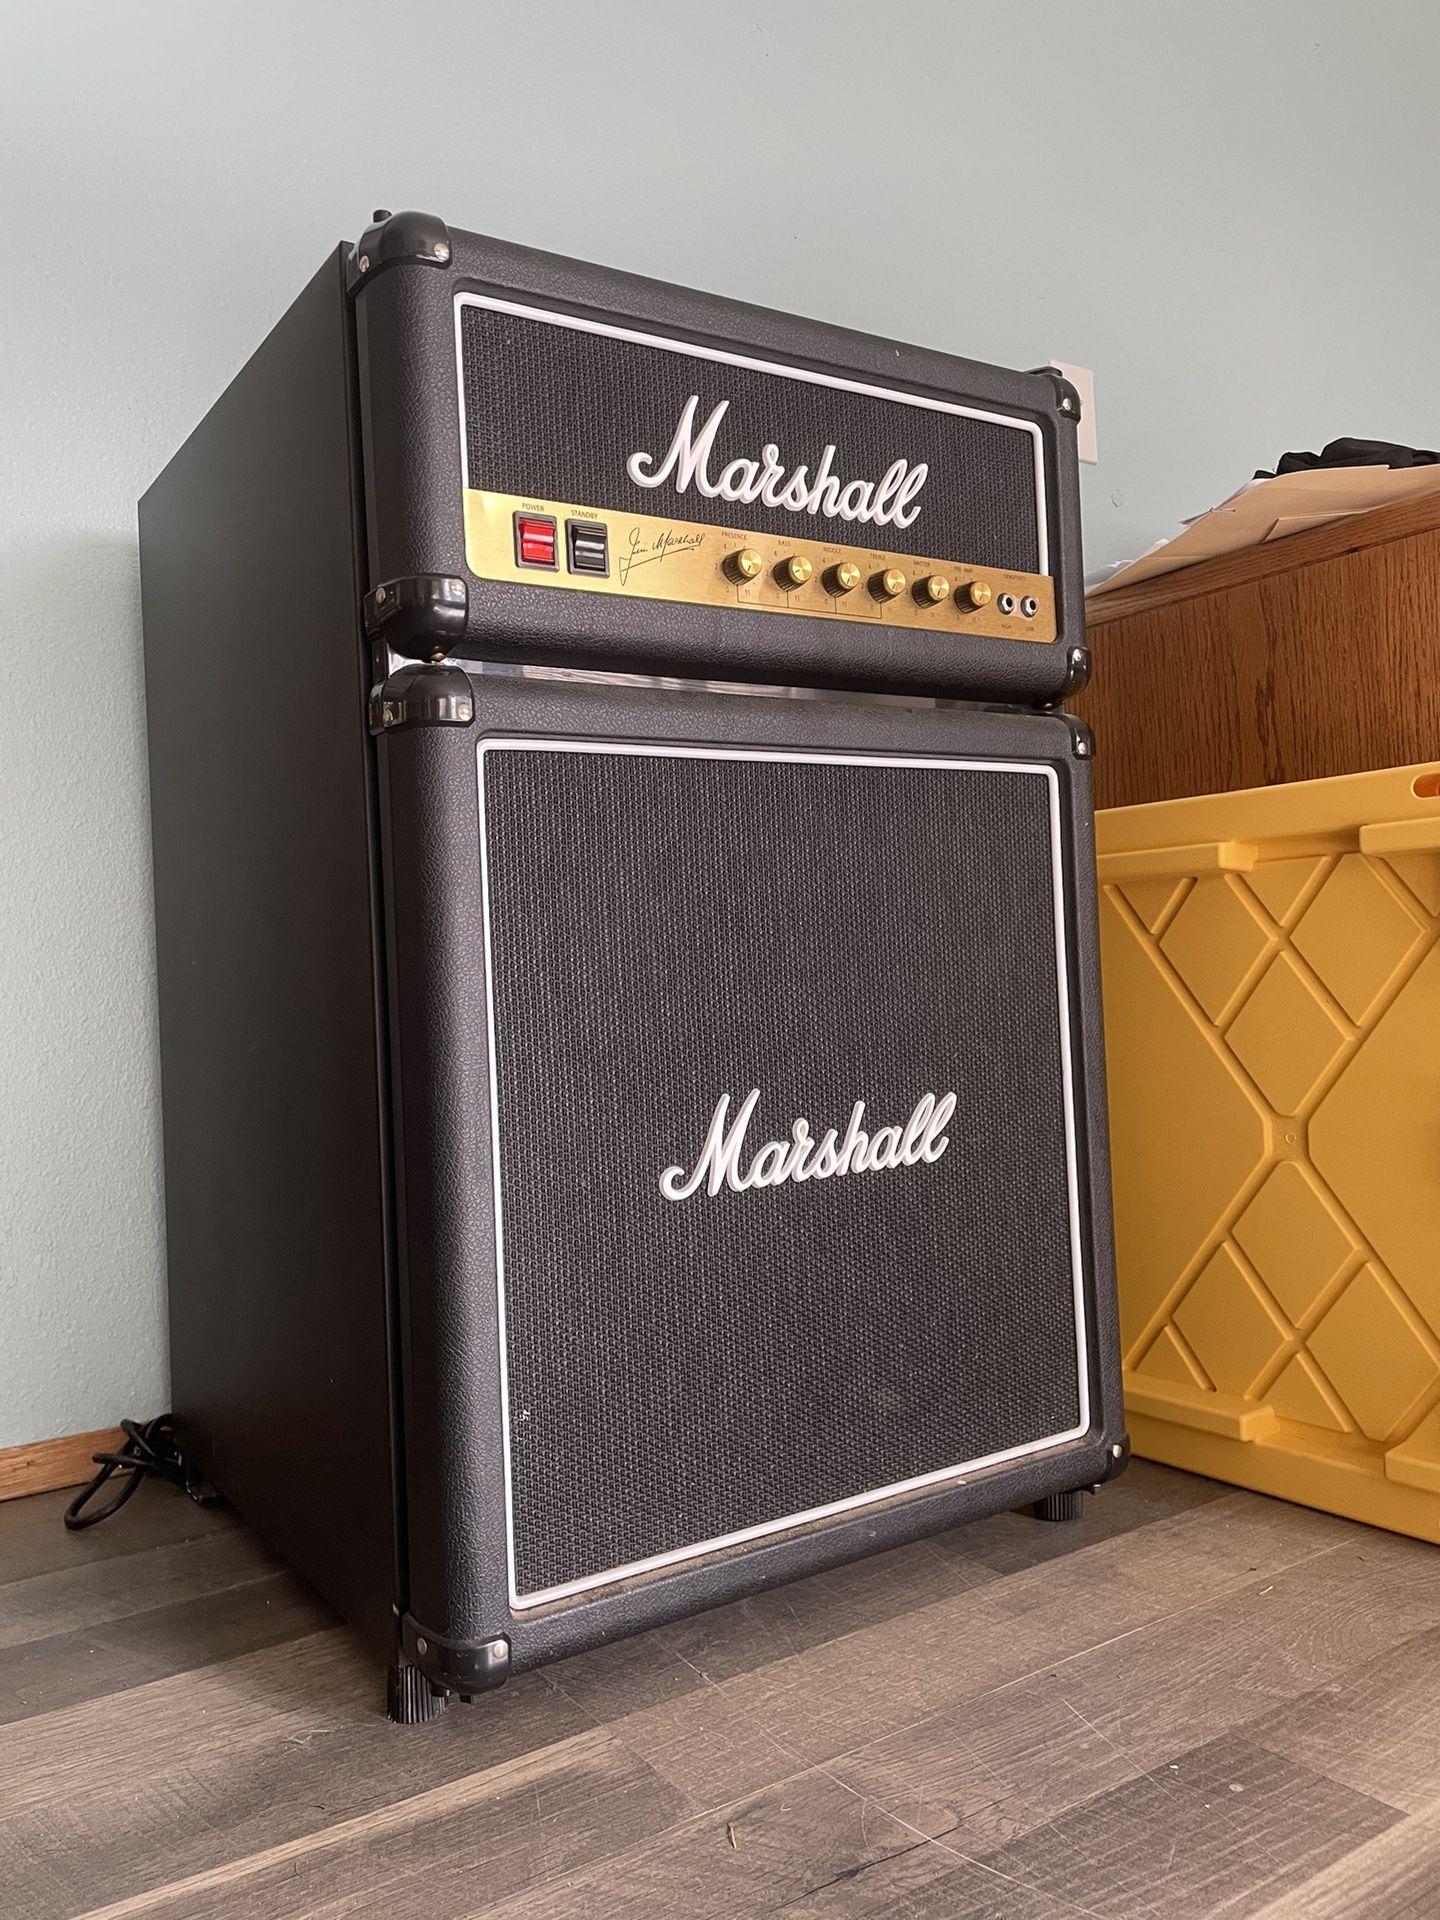 Marshall Amplifier Mini Fridge